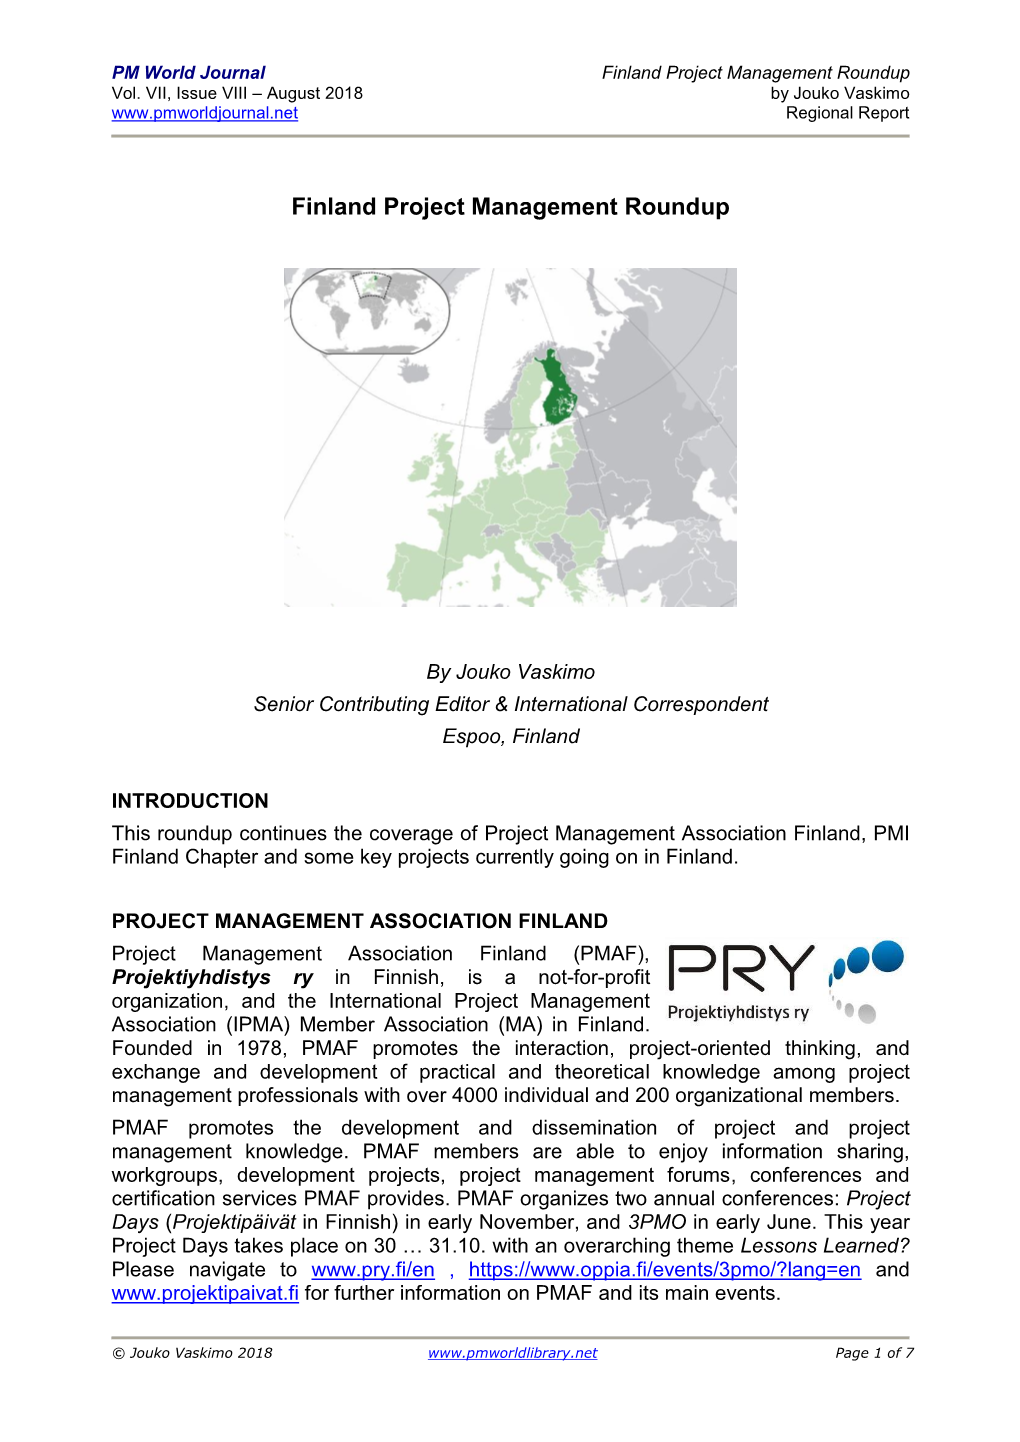 Finland Project Management Roundup Vol